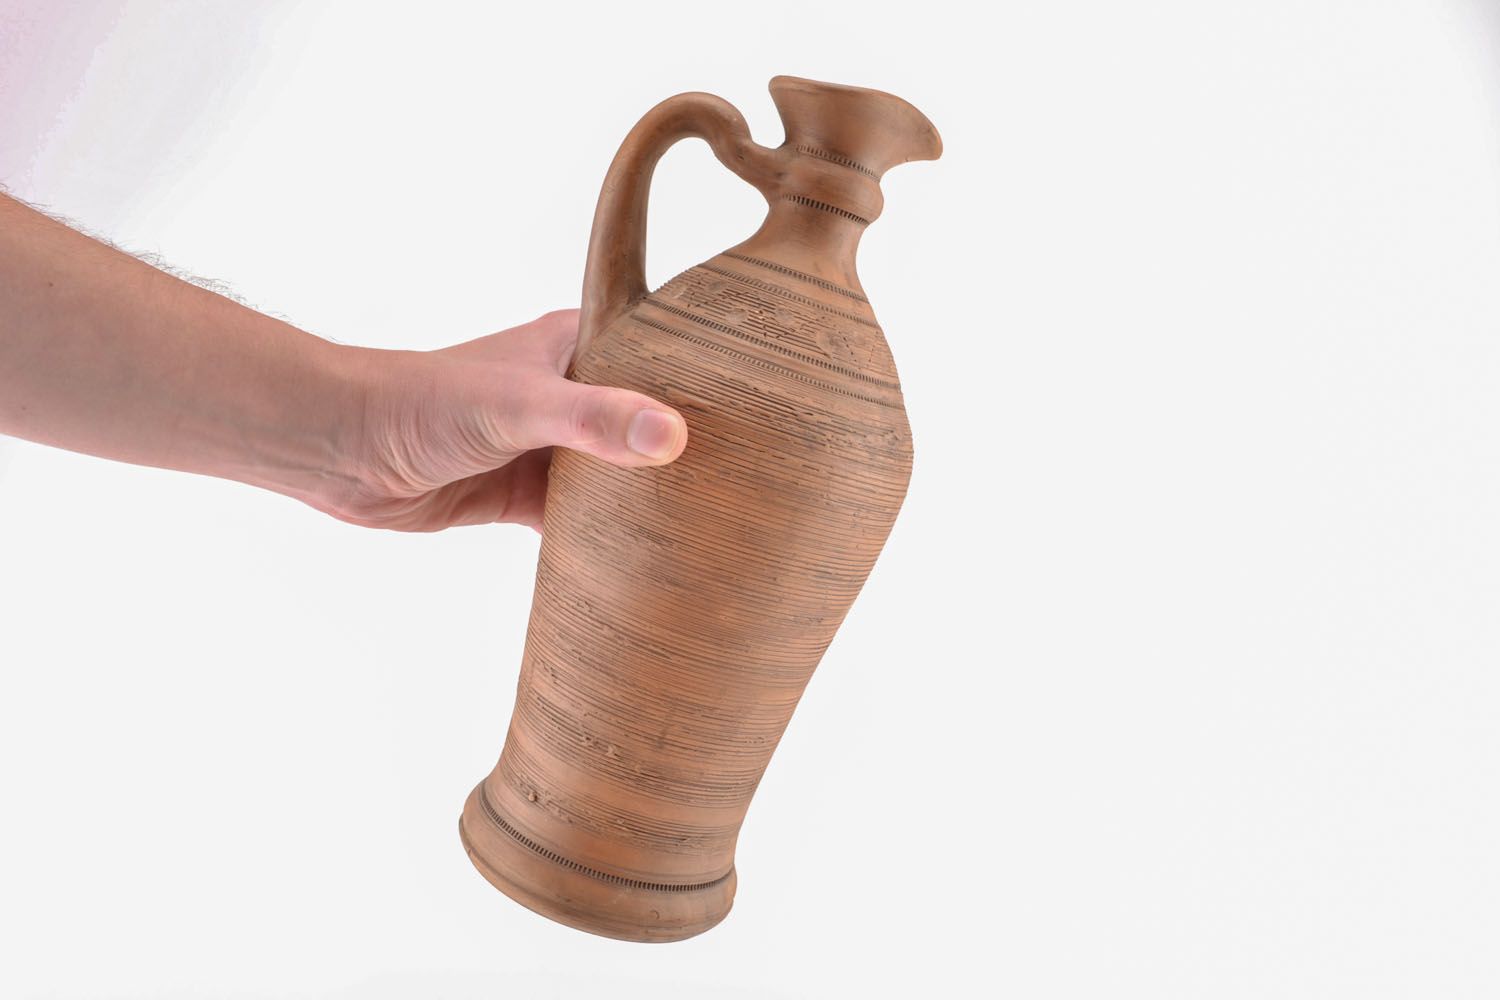 Handmade 30 oz ceramic bottle ceramic pitcher with handle 2,41 lb photo 1